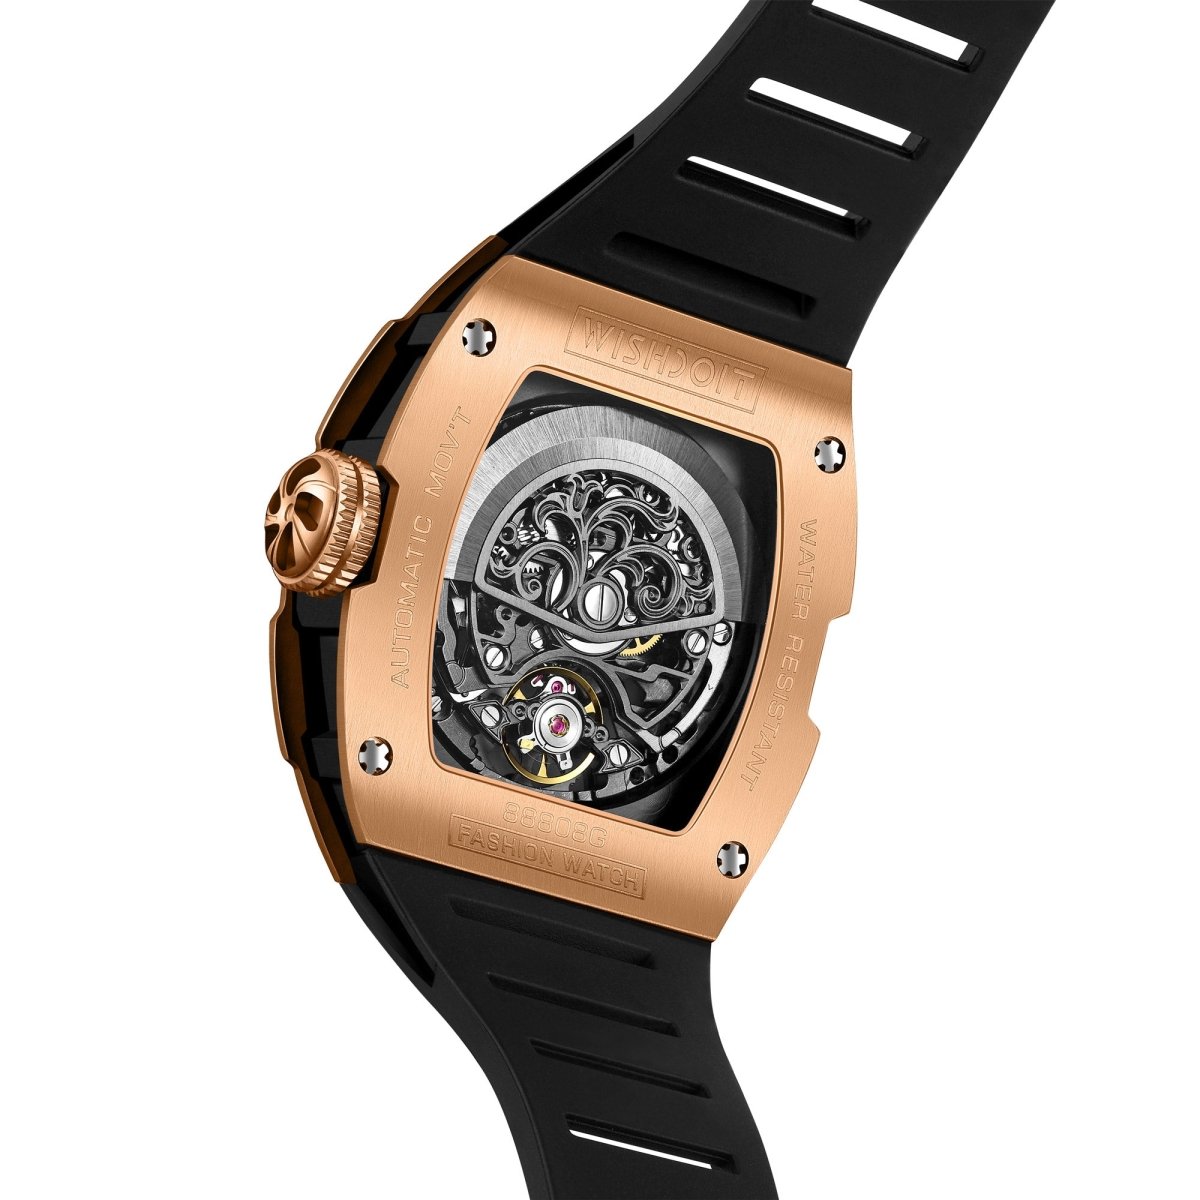 The X-series Tonneau Mechanical Watches For Men - Gold | Wishdoit Watches